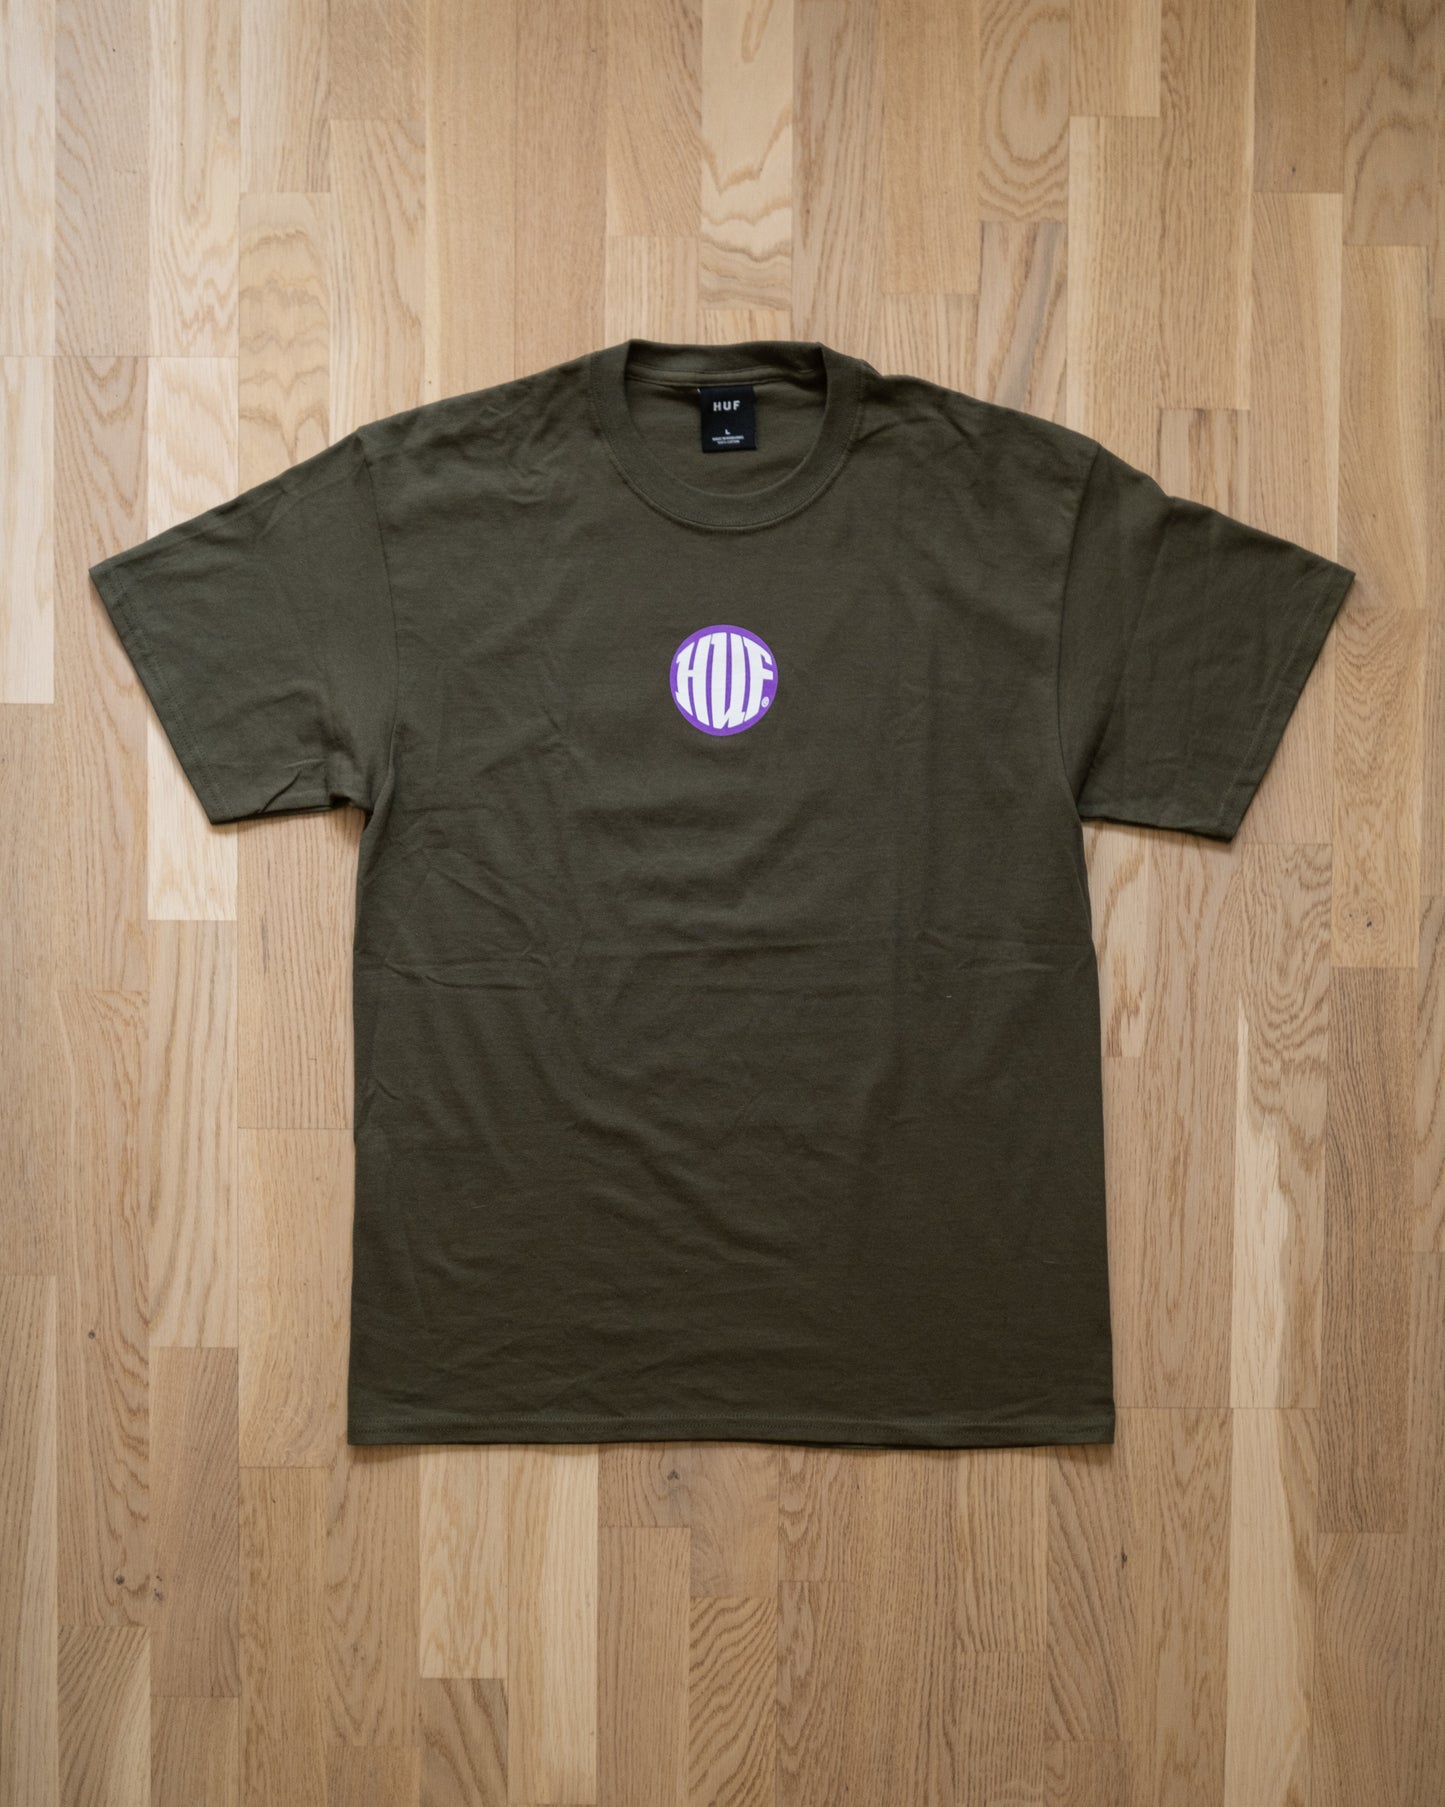 Huf Hi-Fi T-Shirt Size L